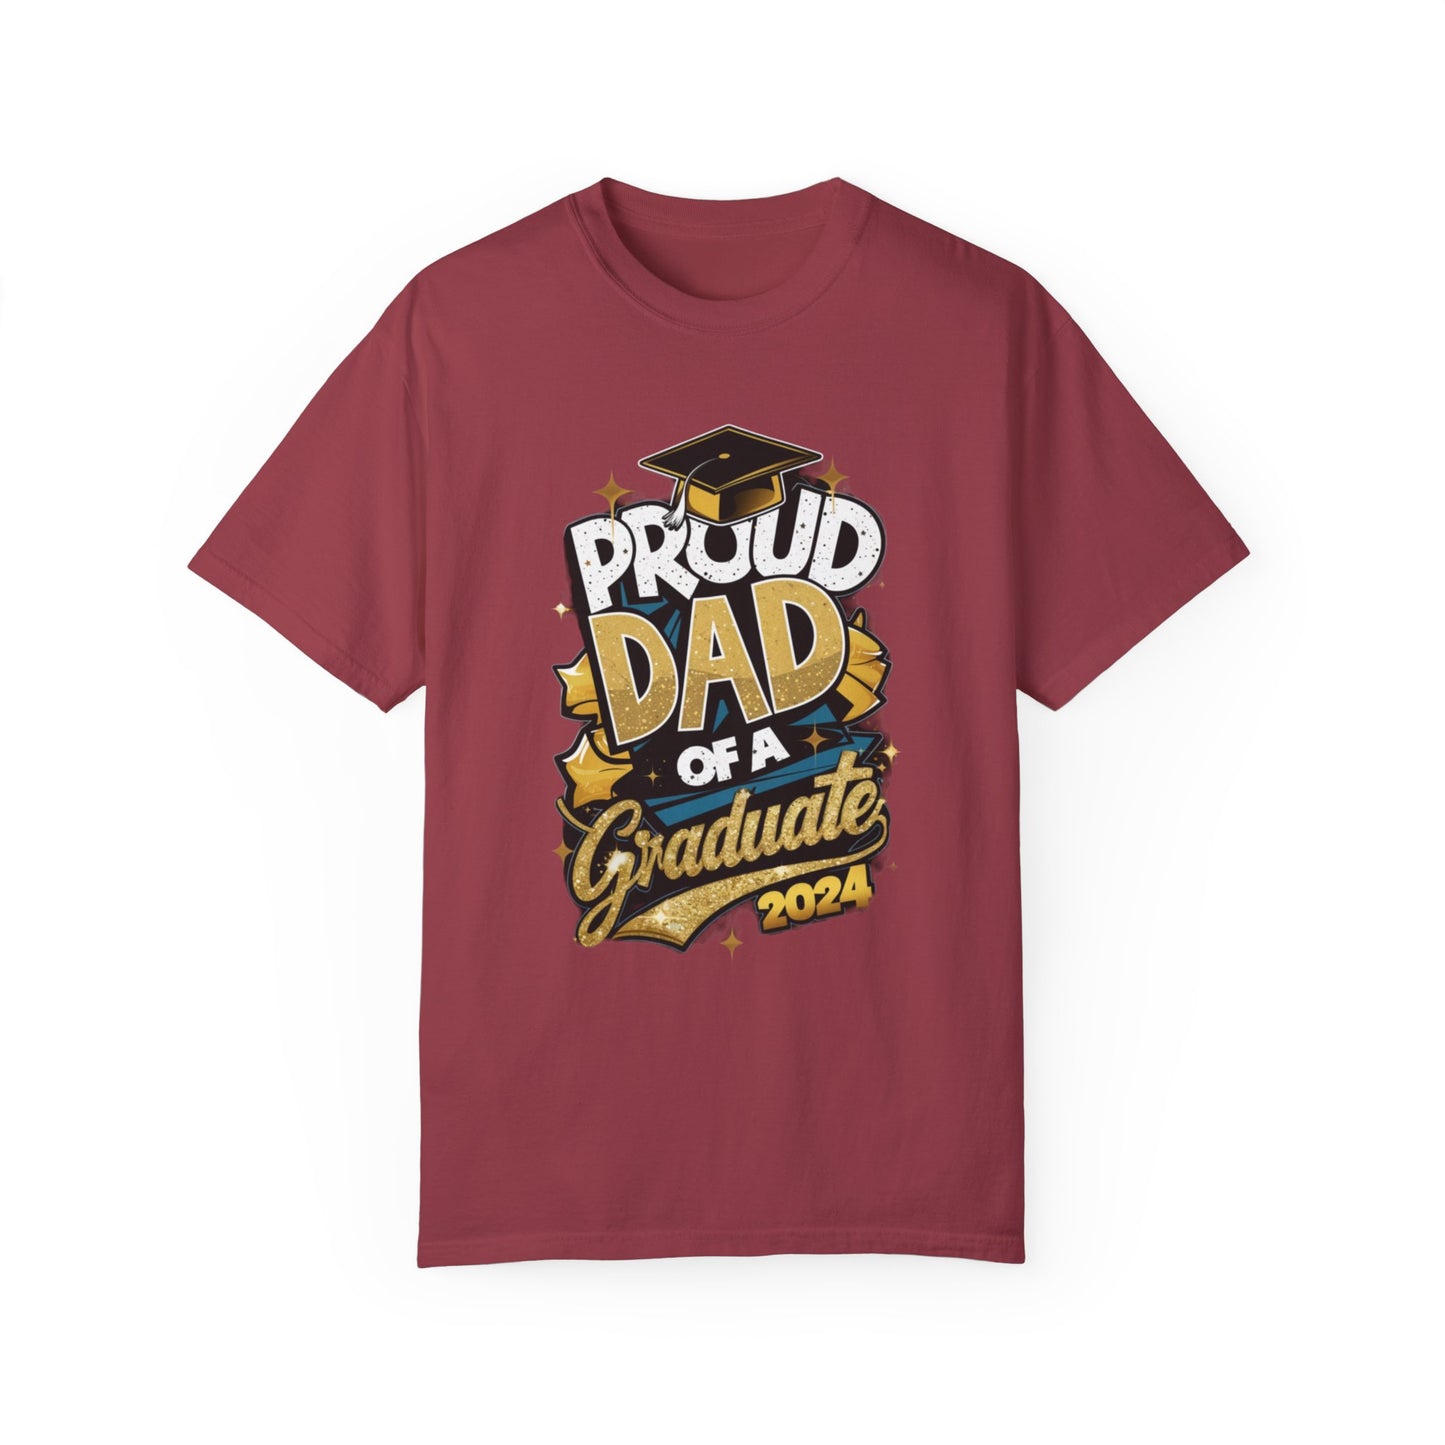 Proud Dad of a 2024 Graduate Unisex Garment-dyed T-shirt Cotton Funny Humorous Graphic Soft Premium Unisex Men Women Chili T-shirt Birthday Gift-7